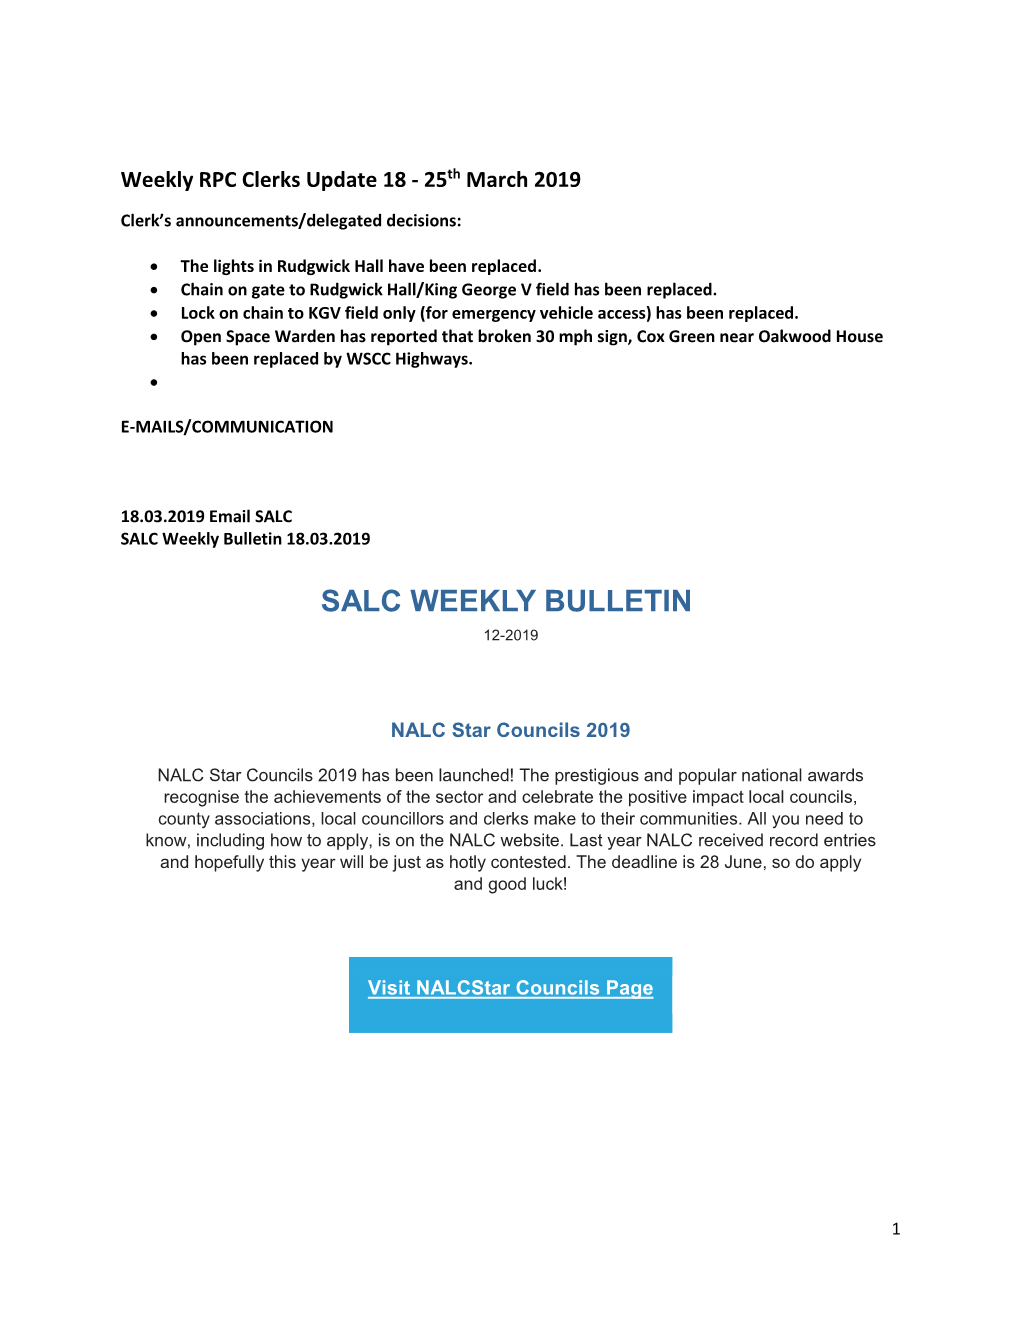 SALC Weekly Bulletin 18.03.2019